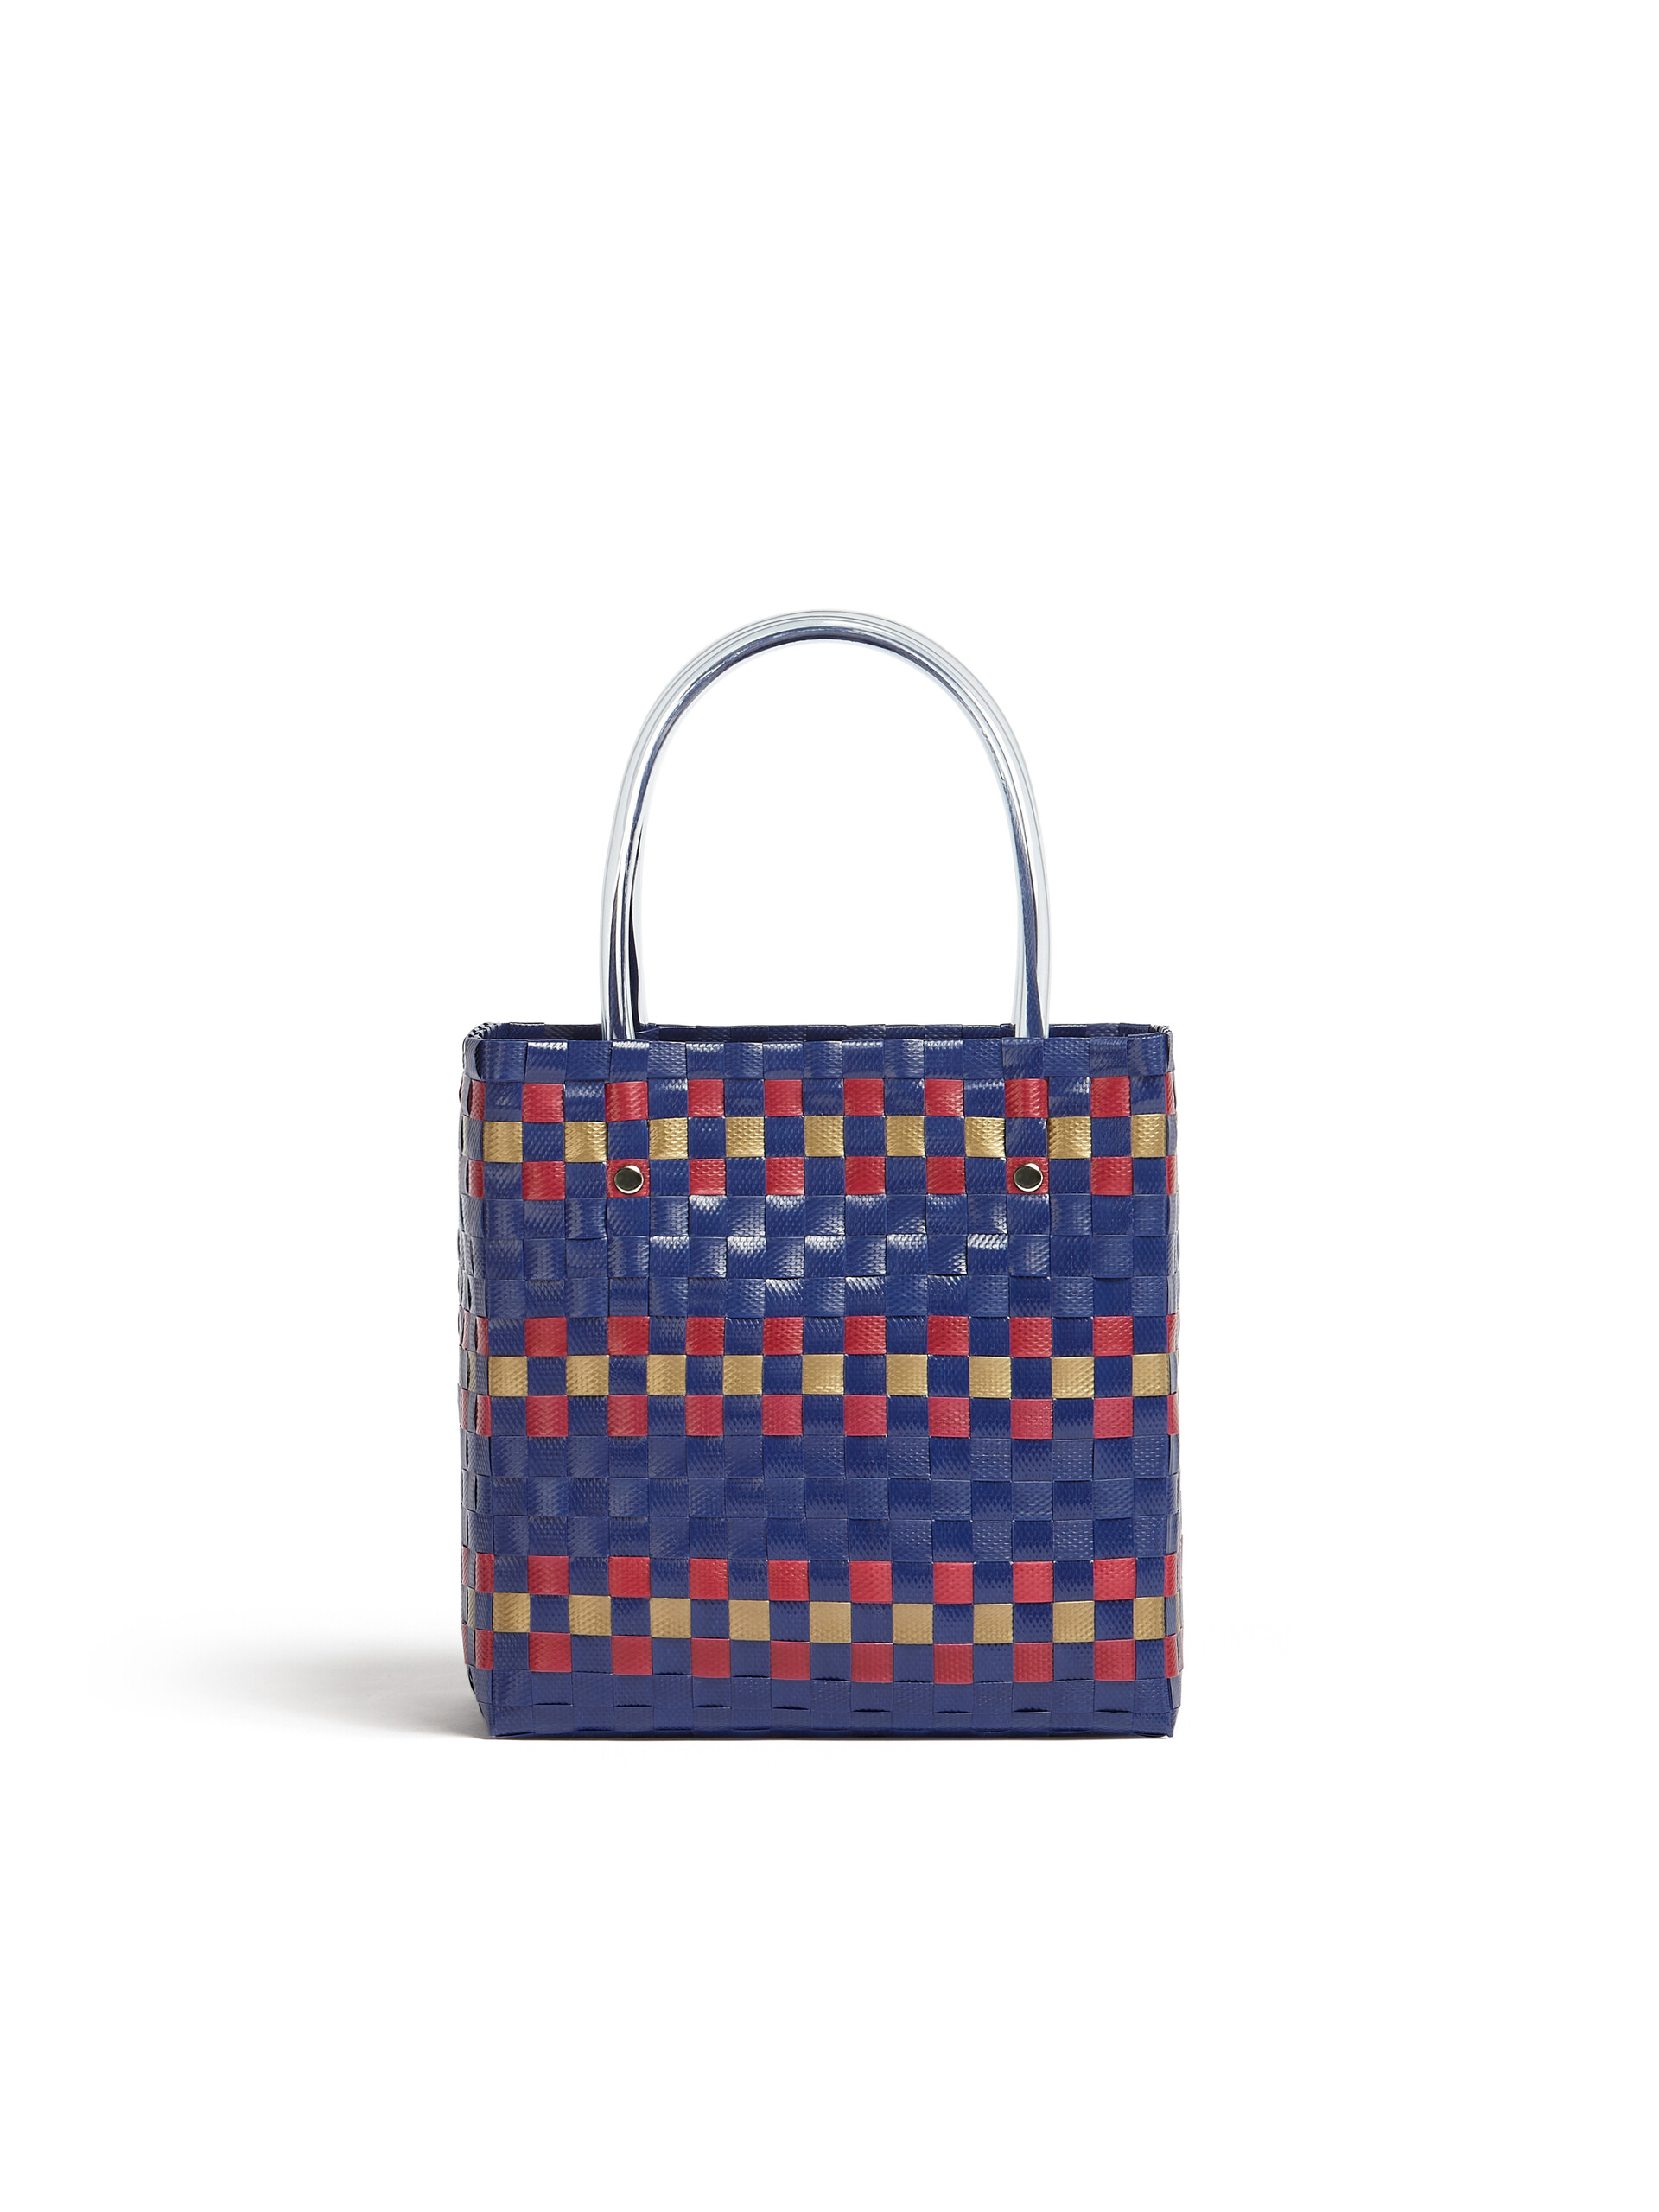 MARNI MARKET shopping bag in blue polypropylene - Bags - Image 3